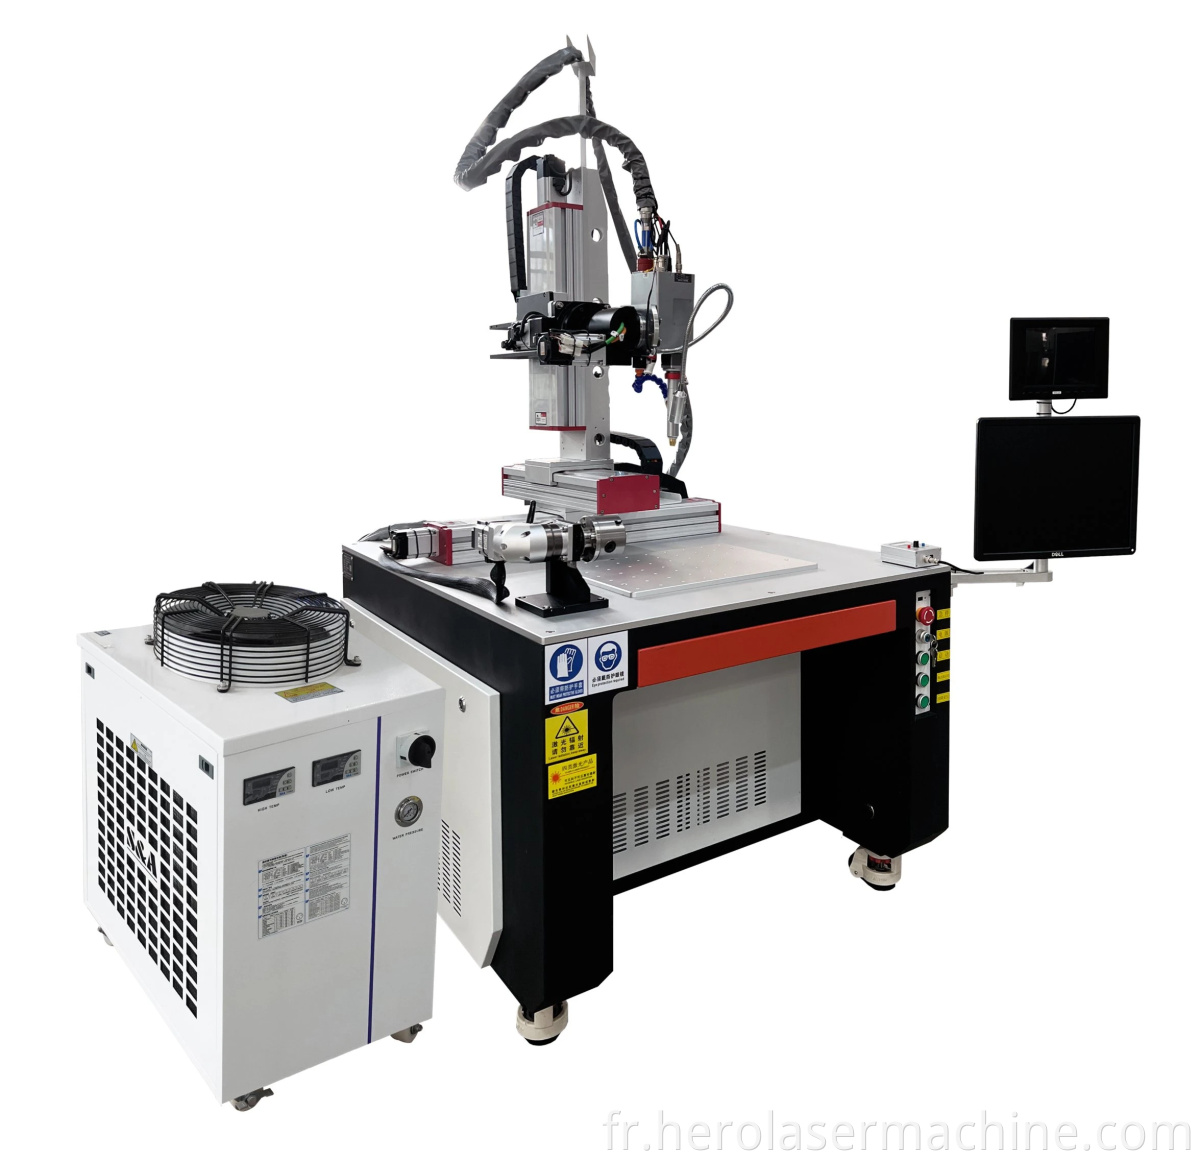 Herolaser Automatic Laser Welding Robot